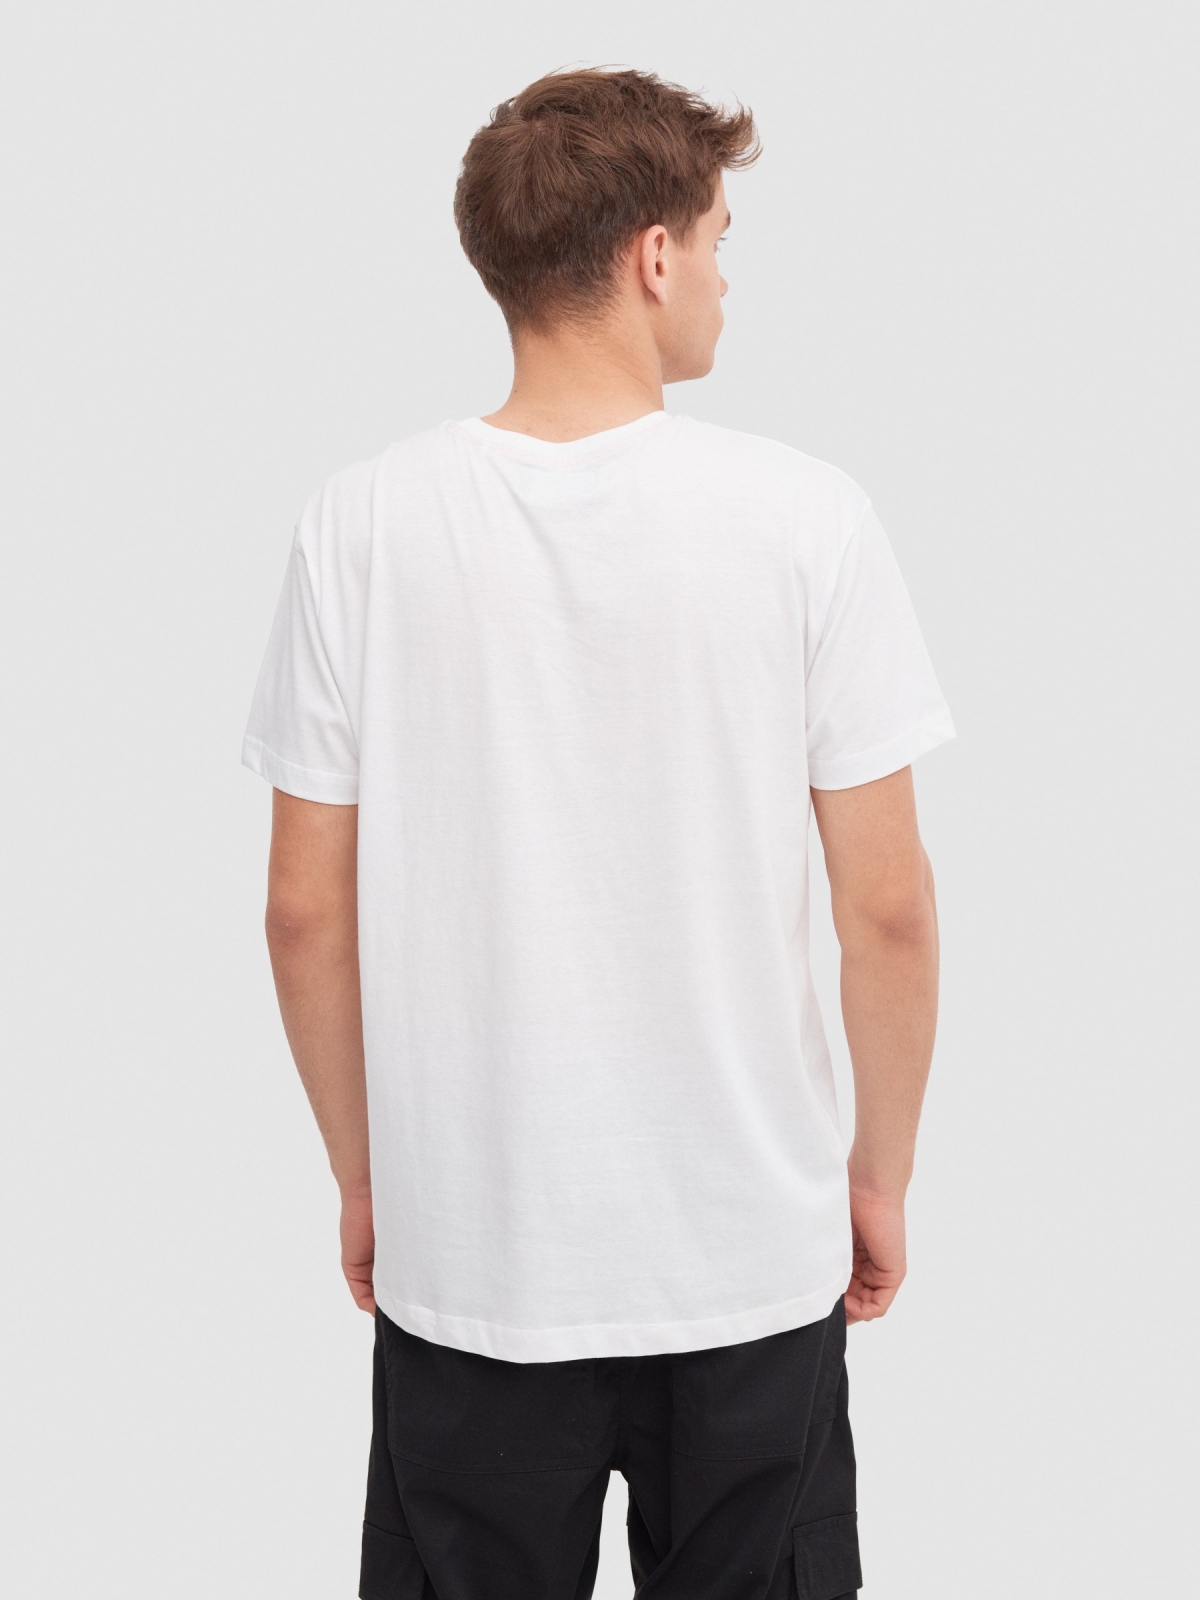 Camiseta manga corta calavera blanco vista media trasera